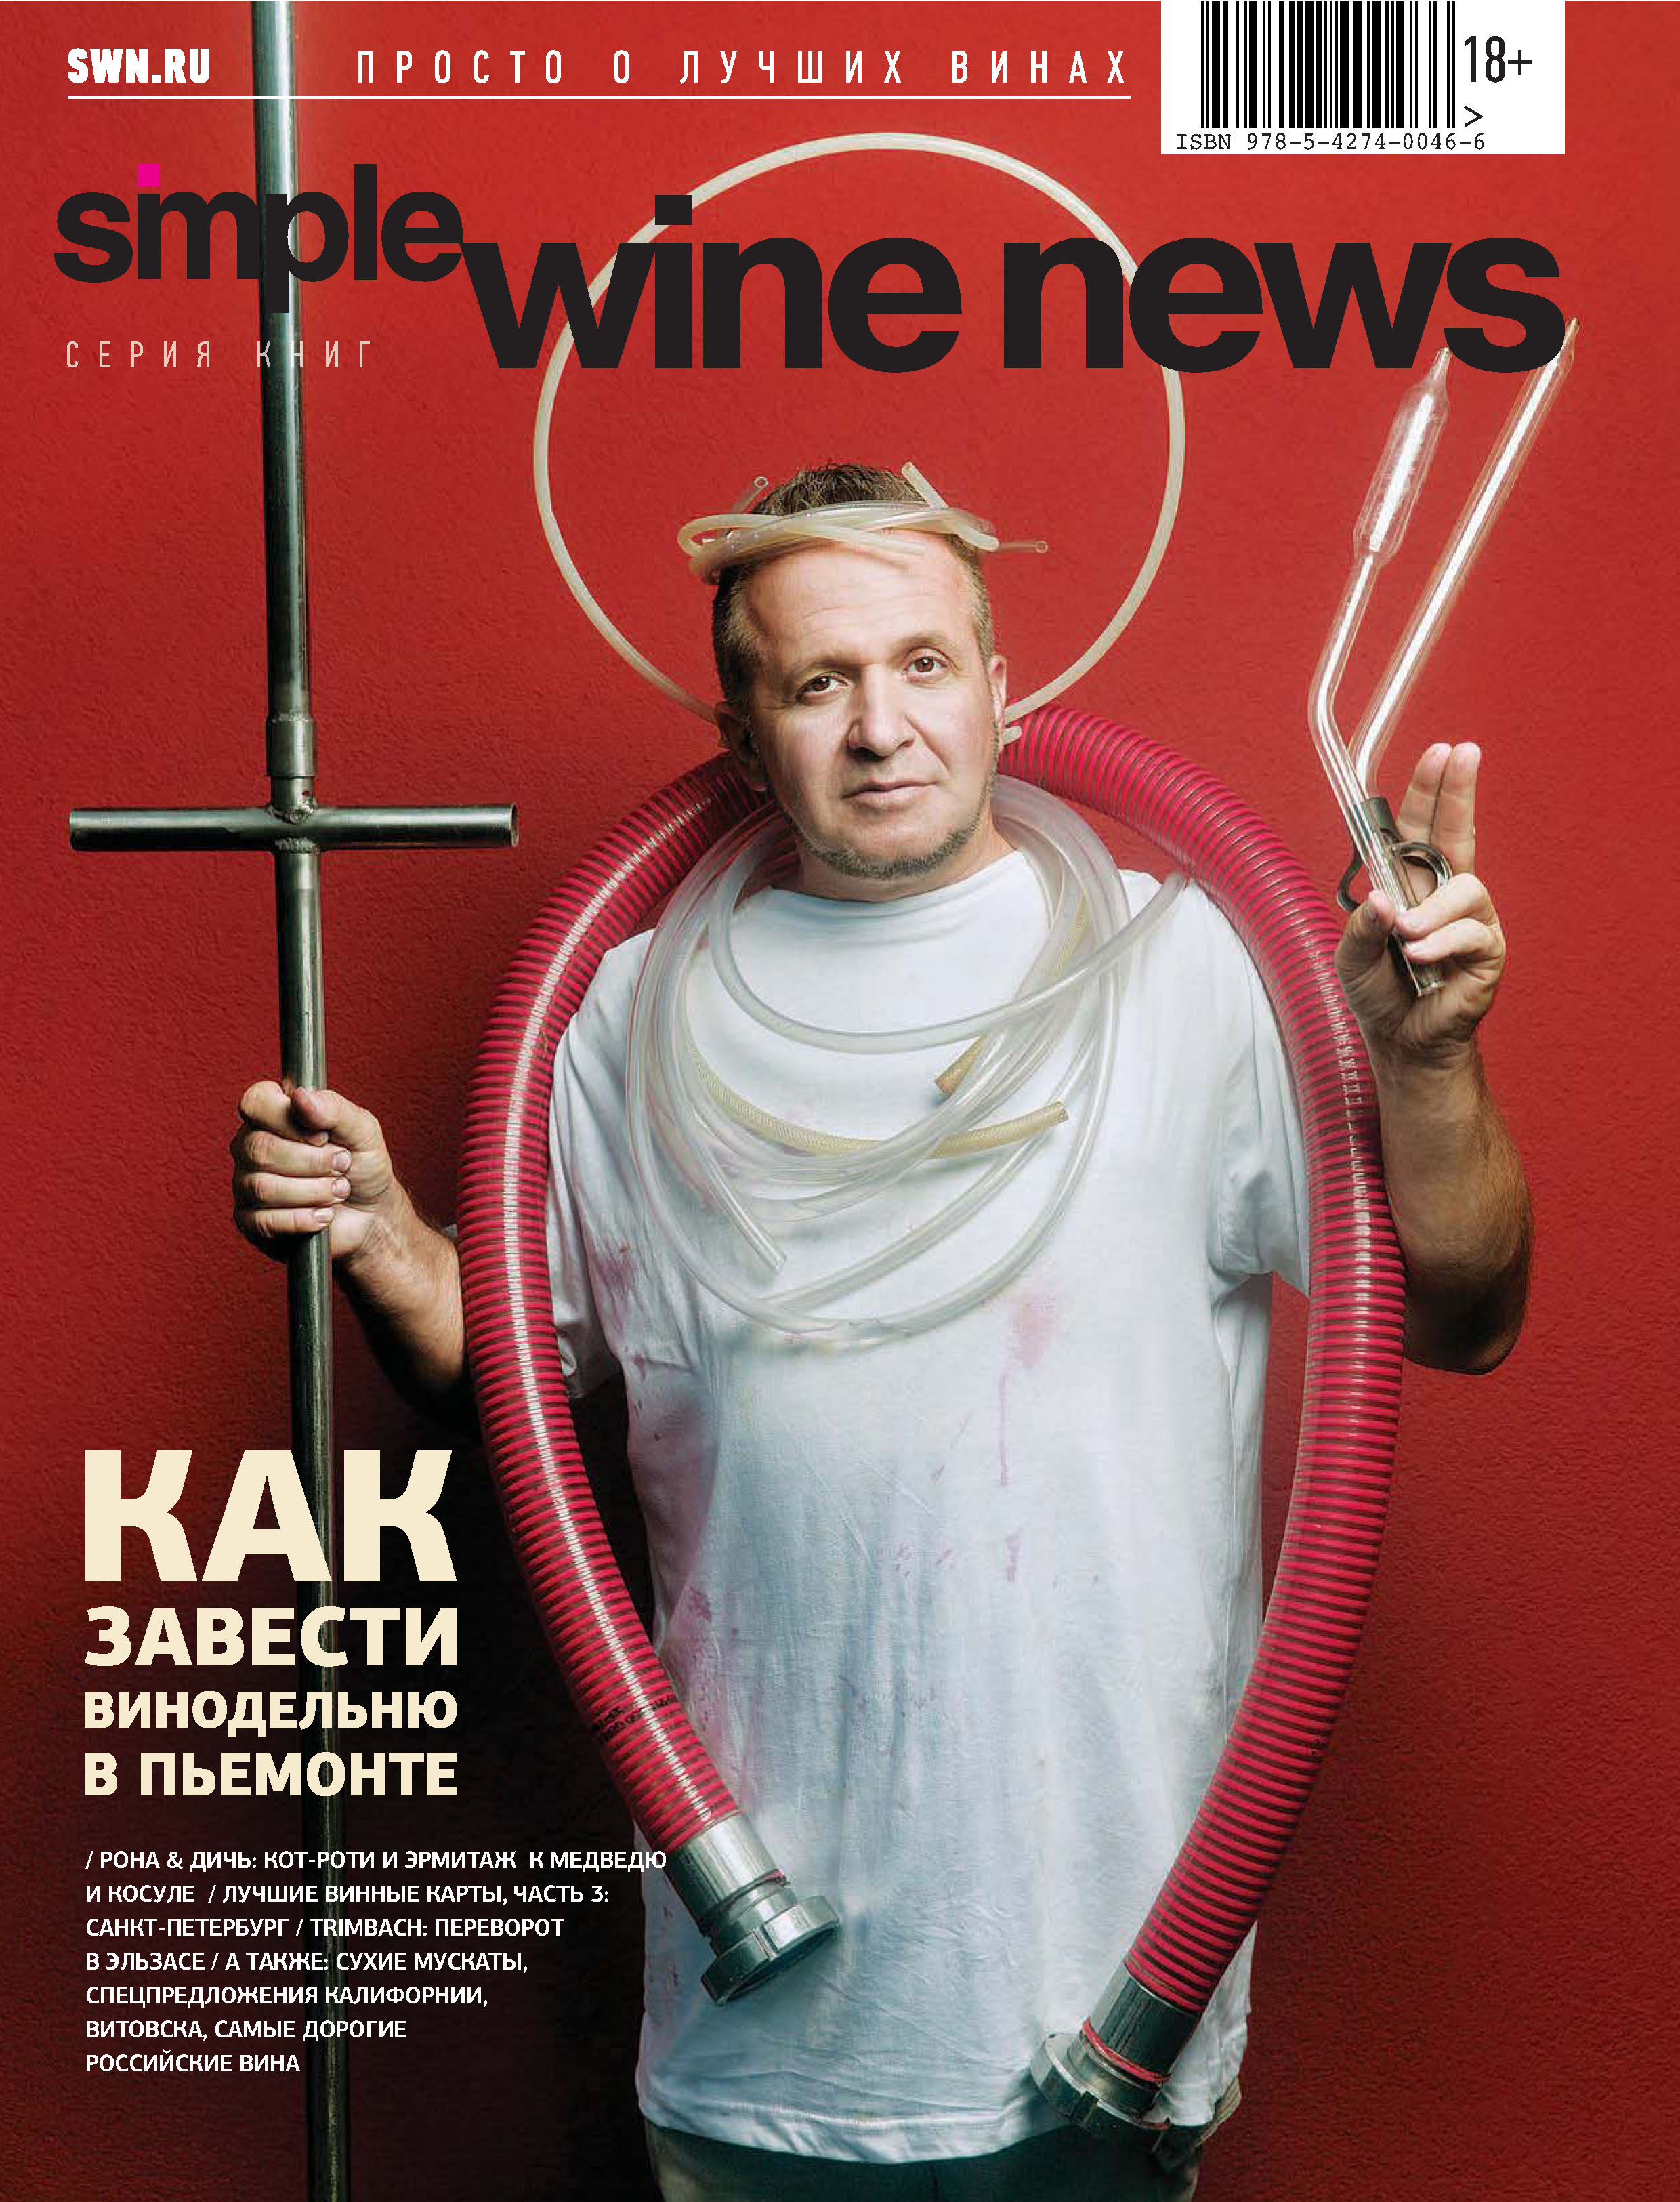 Simple magazine. Simple Wine News. Wine News журнал. Симпл вайн журнал. Книги Симпл вайн.